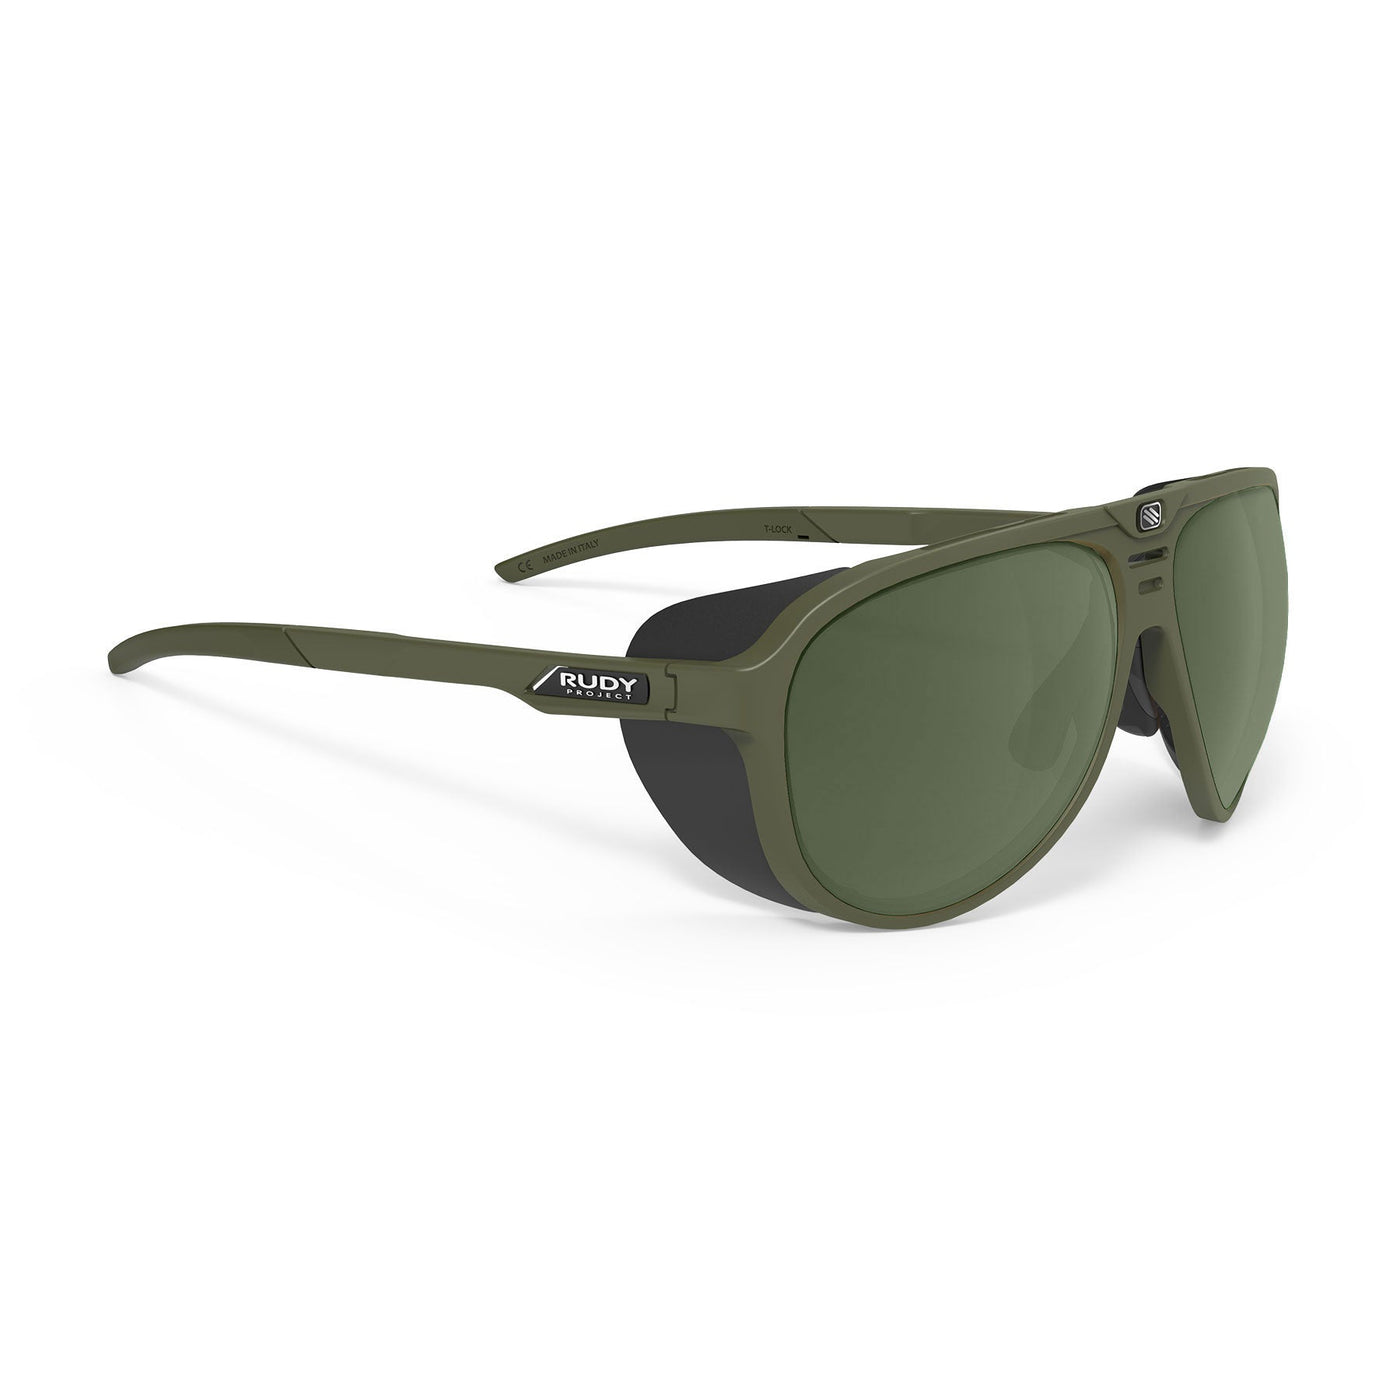 Rudy Project Stardash prescription hiking and glacier sport sunglasses#color_stardash-olive-matte-with-polarized-green-g15-lenses